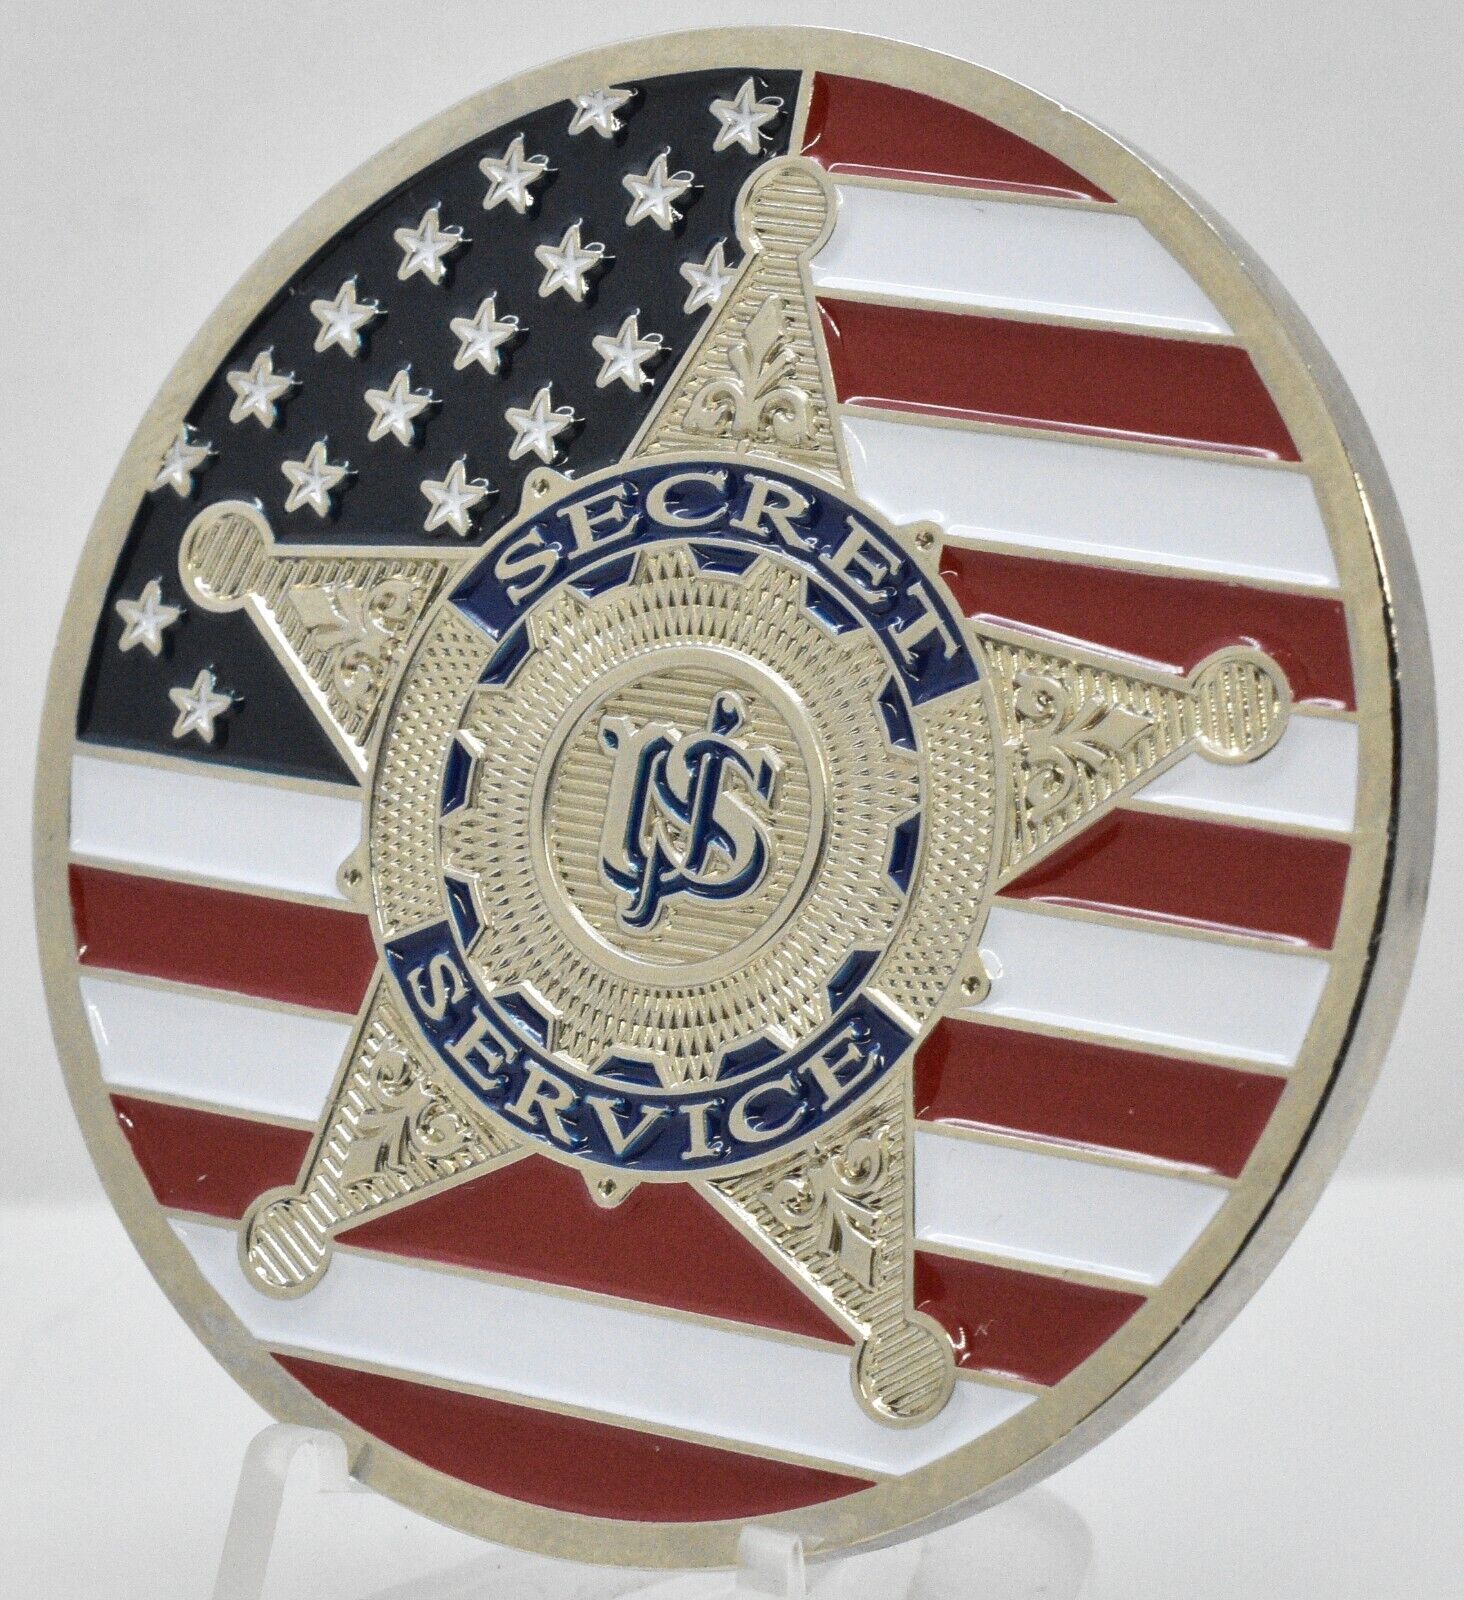 Secret Service Transportation Vice Presidential Protective Div. Challenge Coin